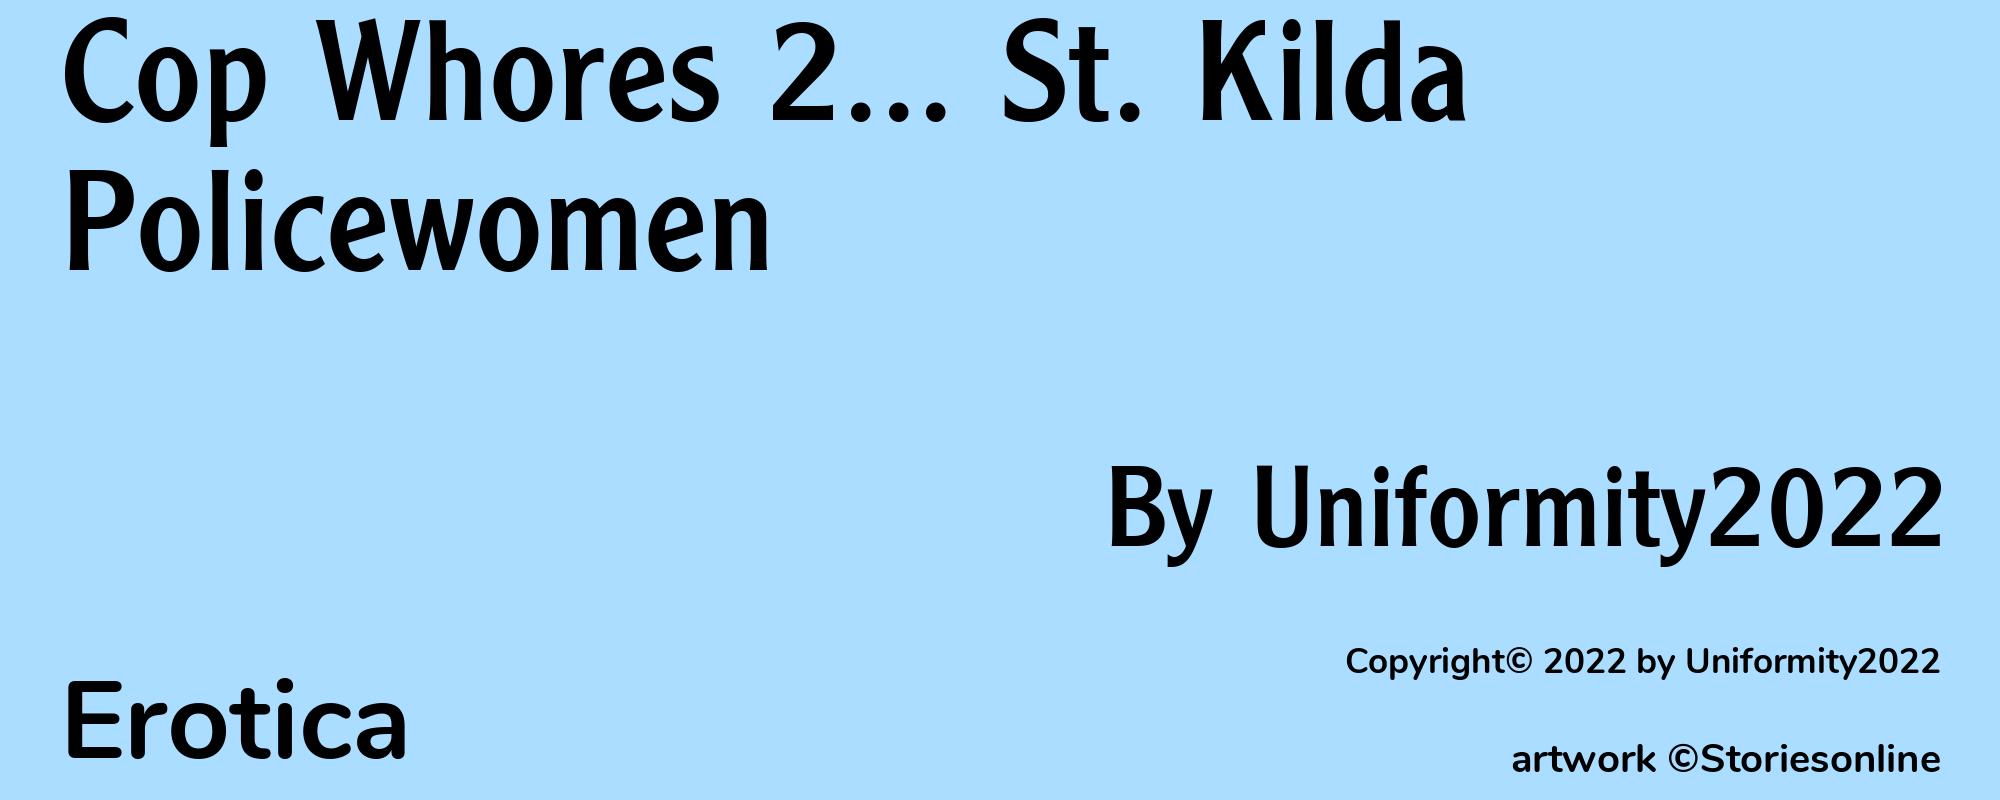 Cop Whores 2... St. Kilda Policewomen - Cover